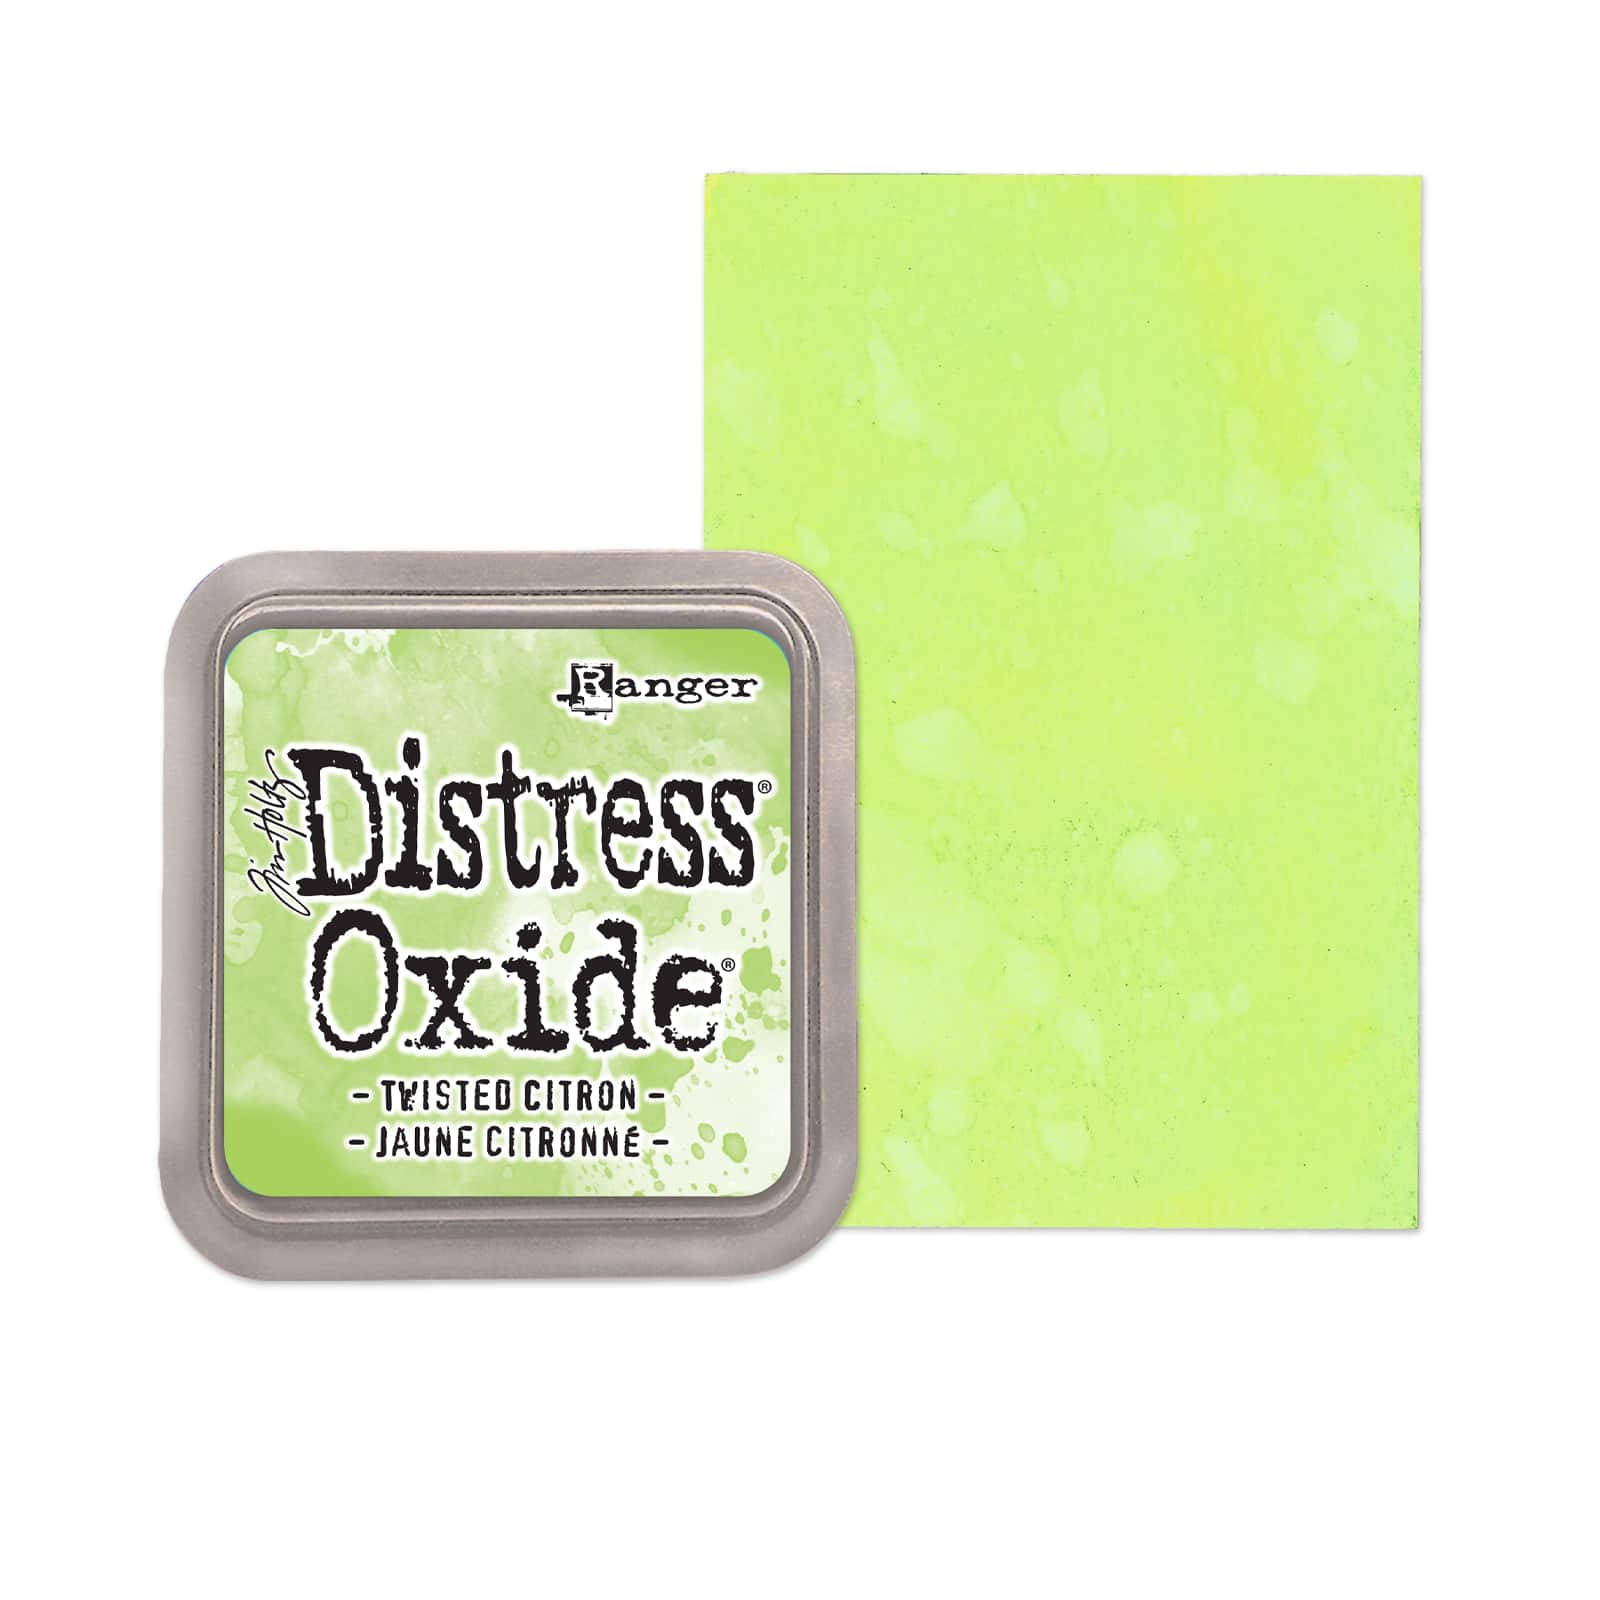 Tim Holtz Distress Oxides Ink Pad - NOTM047887